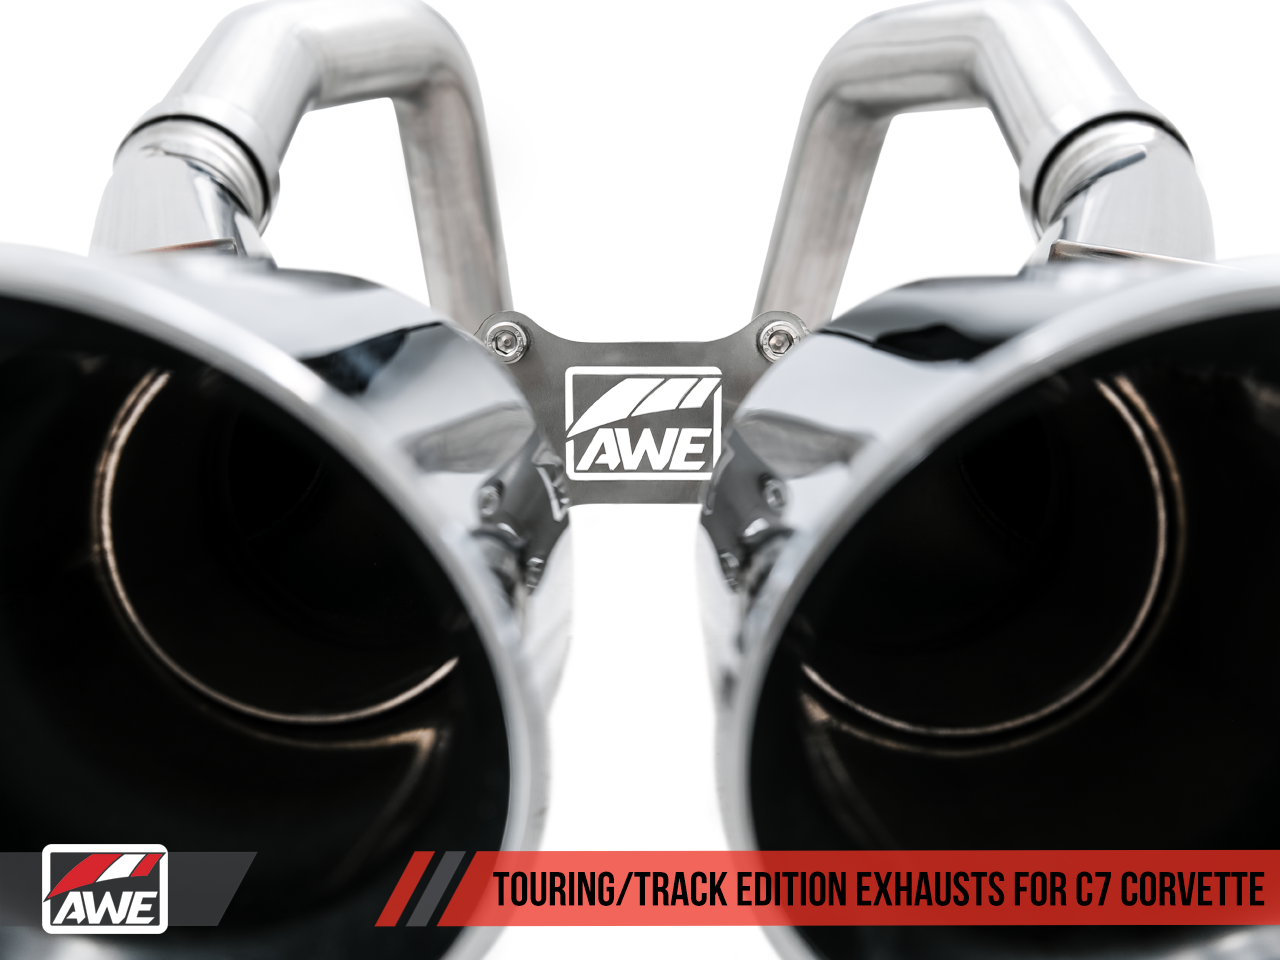 AWE Touring Edition Axleback Exhaust for C7 Corvette Stingray / Z51 / Grand Sport / Z06 / ZR1 - Motorsports LA